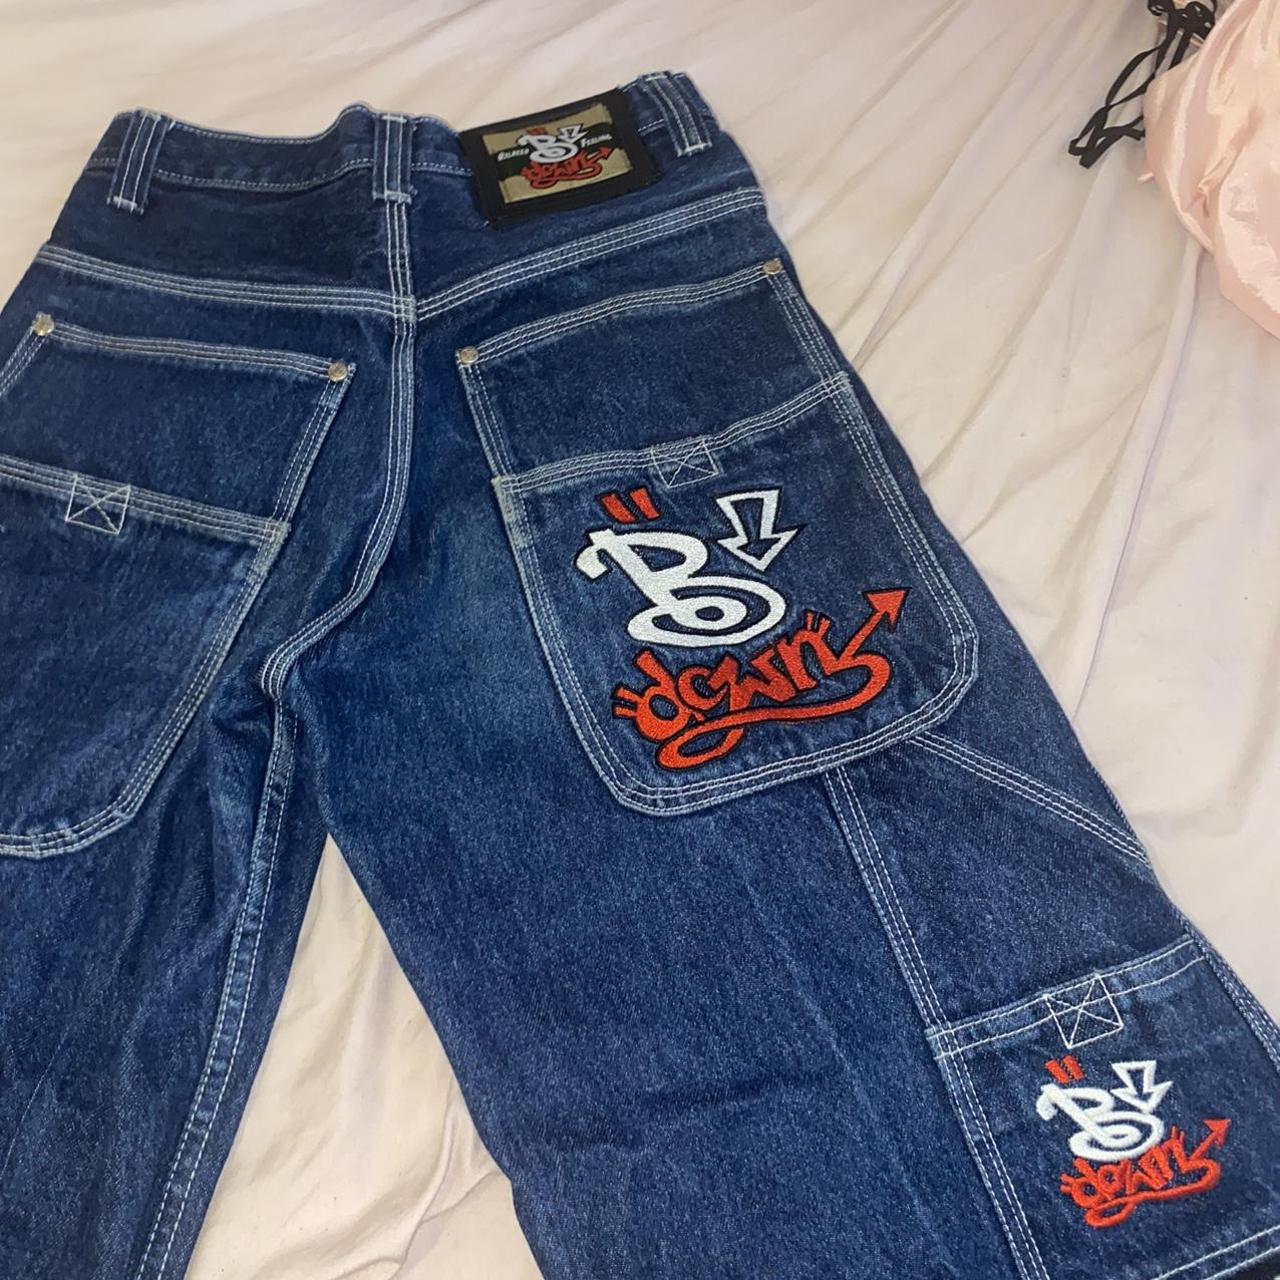 B down wide leg 2000s jeans ⭐️ so insane reminds me... - Depop